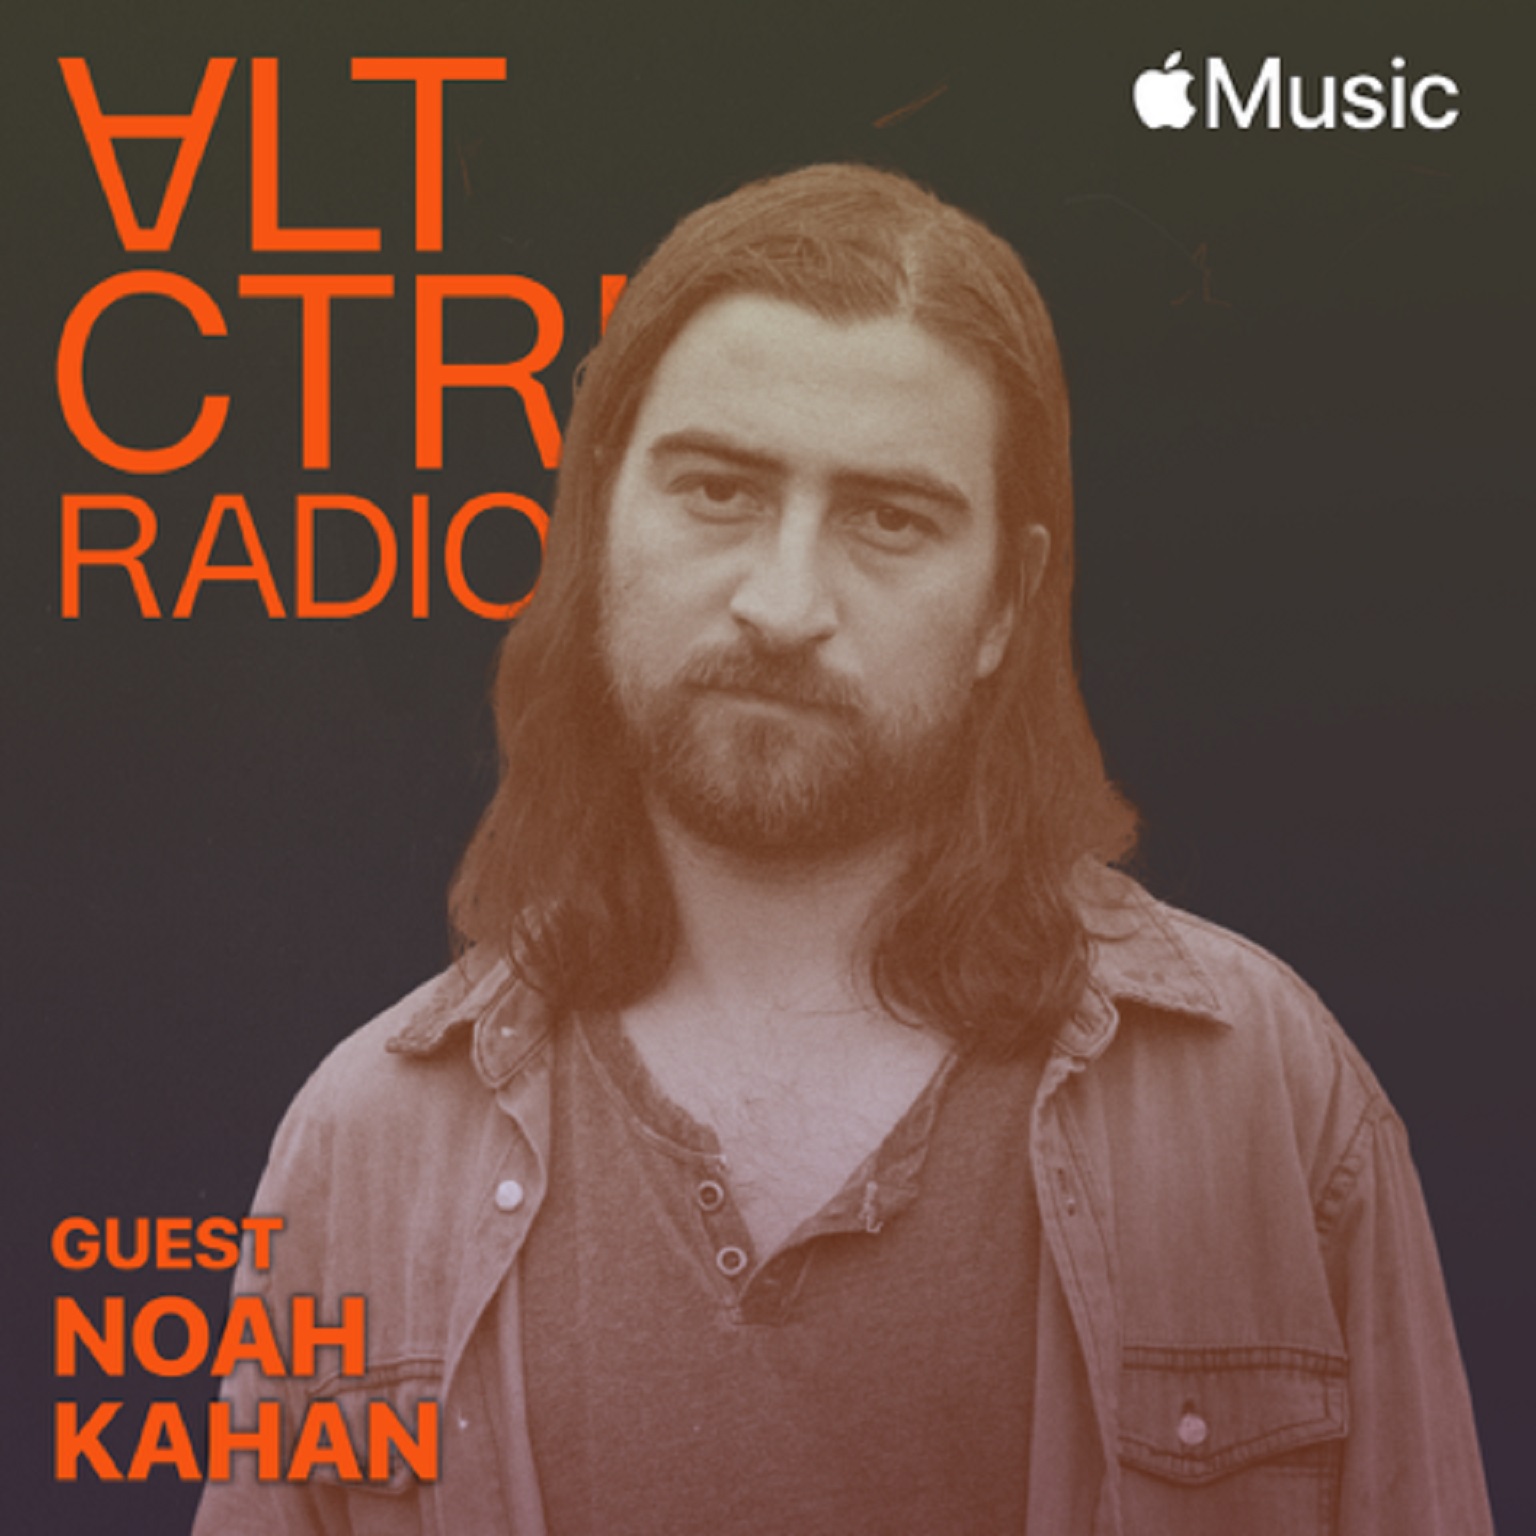 Noah Kahan Talks Apple Music About The New boygenius Album, His